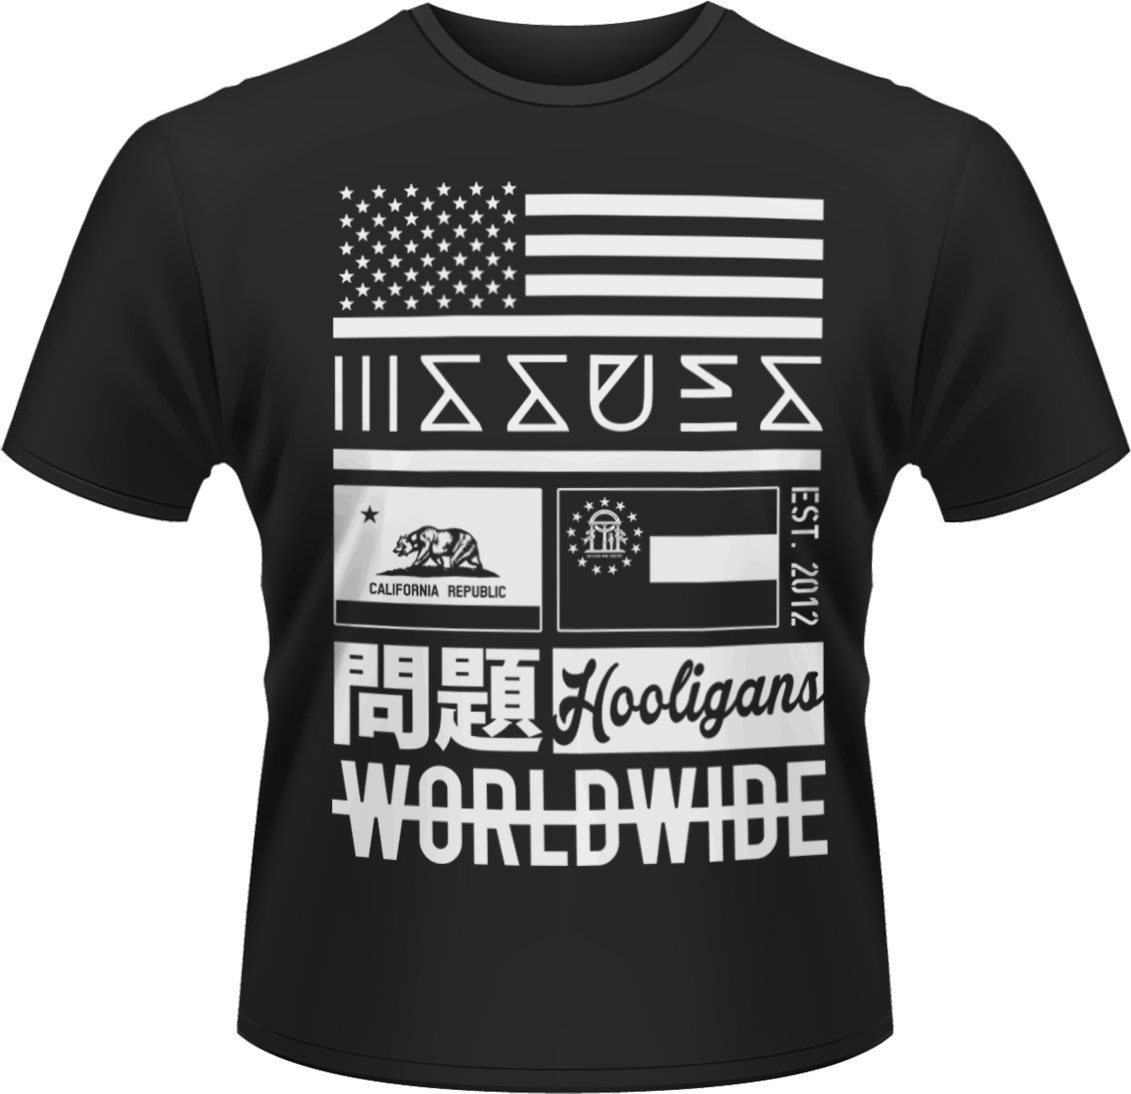 T-Shirt Issues T-Shirt Worldwide Male Black M